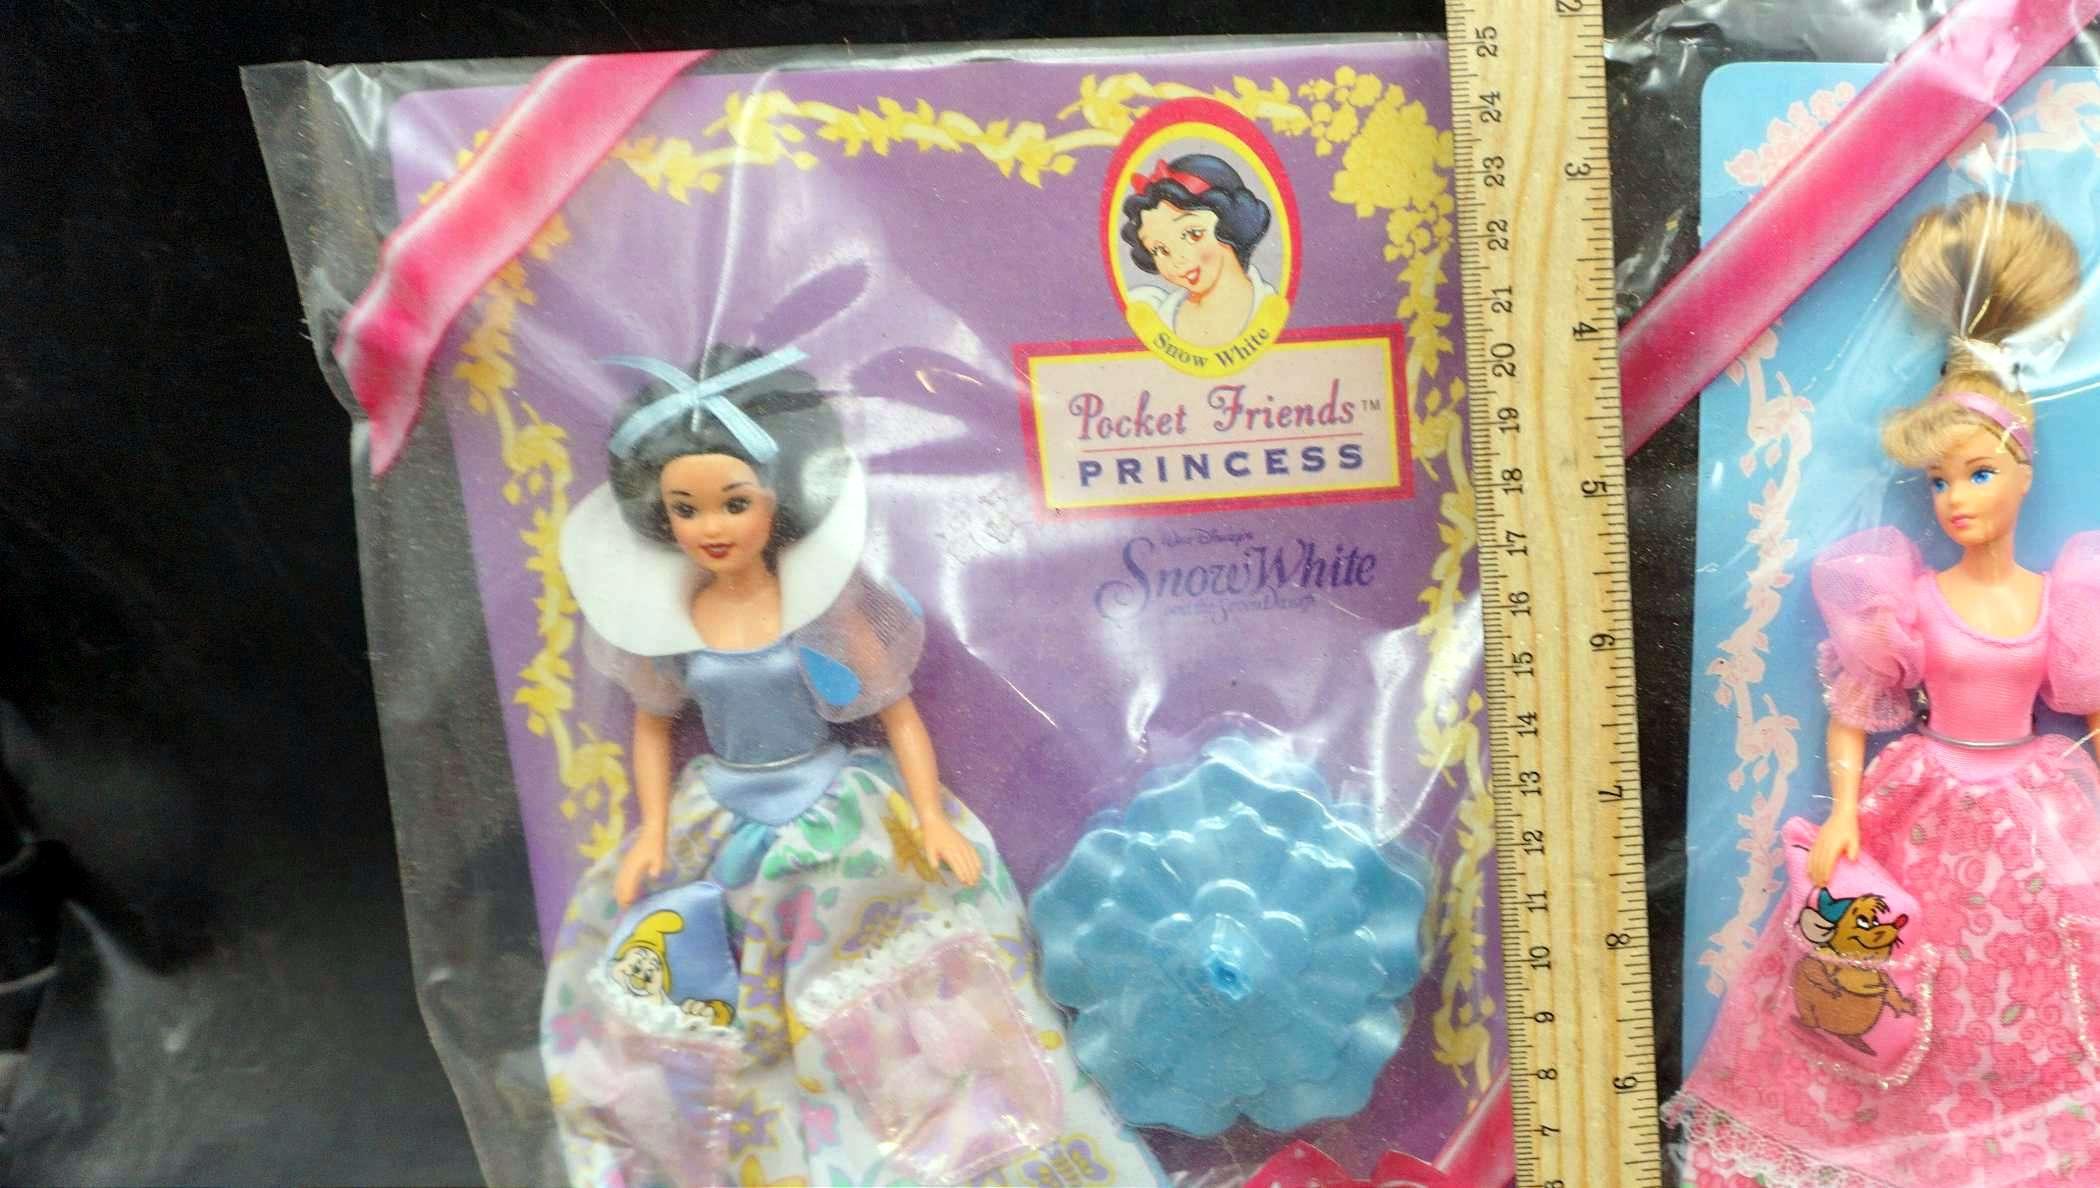 2 Pocket Friends Princesses - Snow White & Cinderella